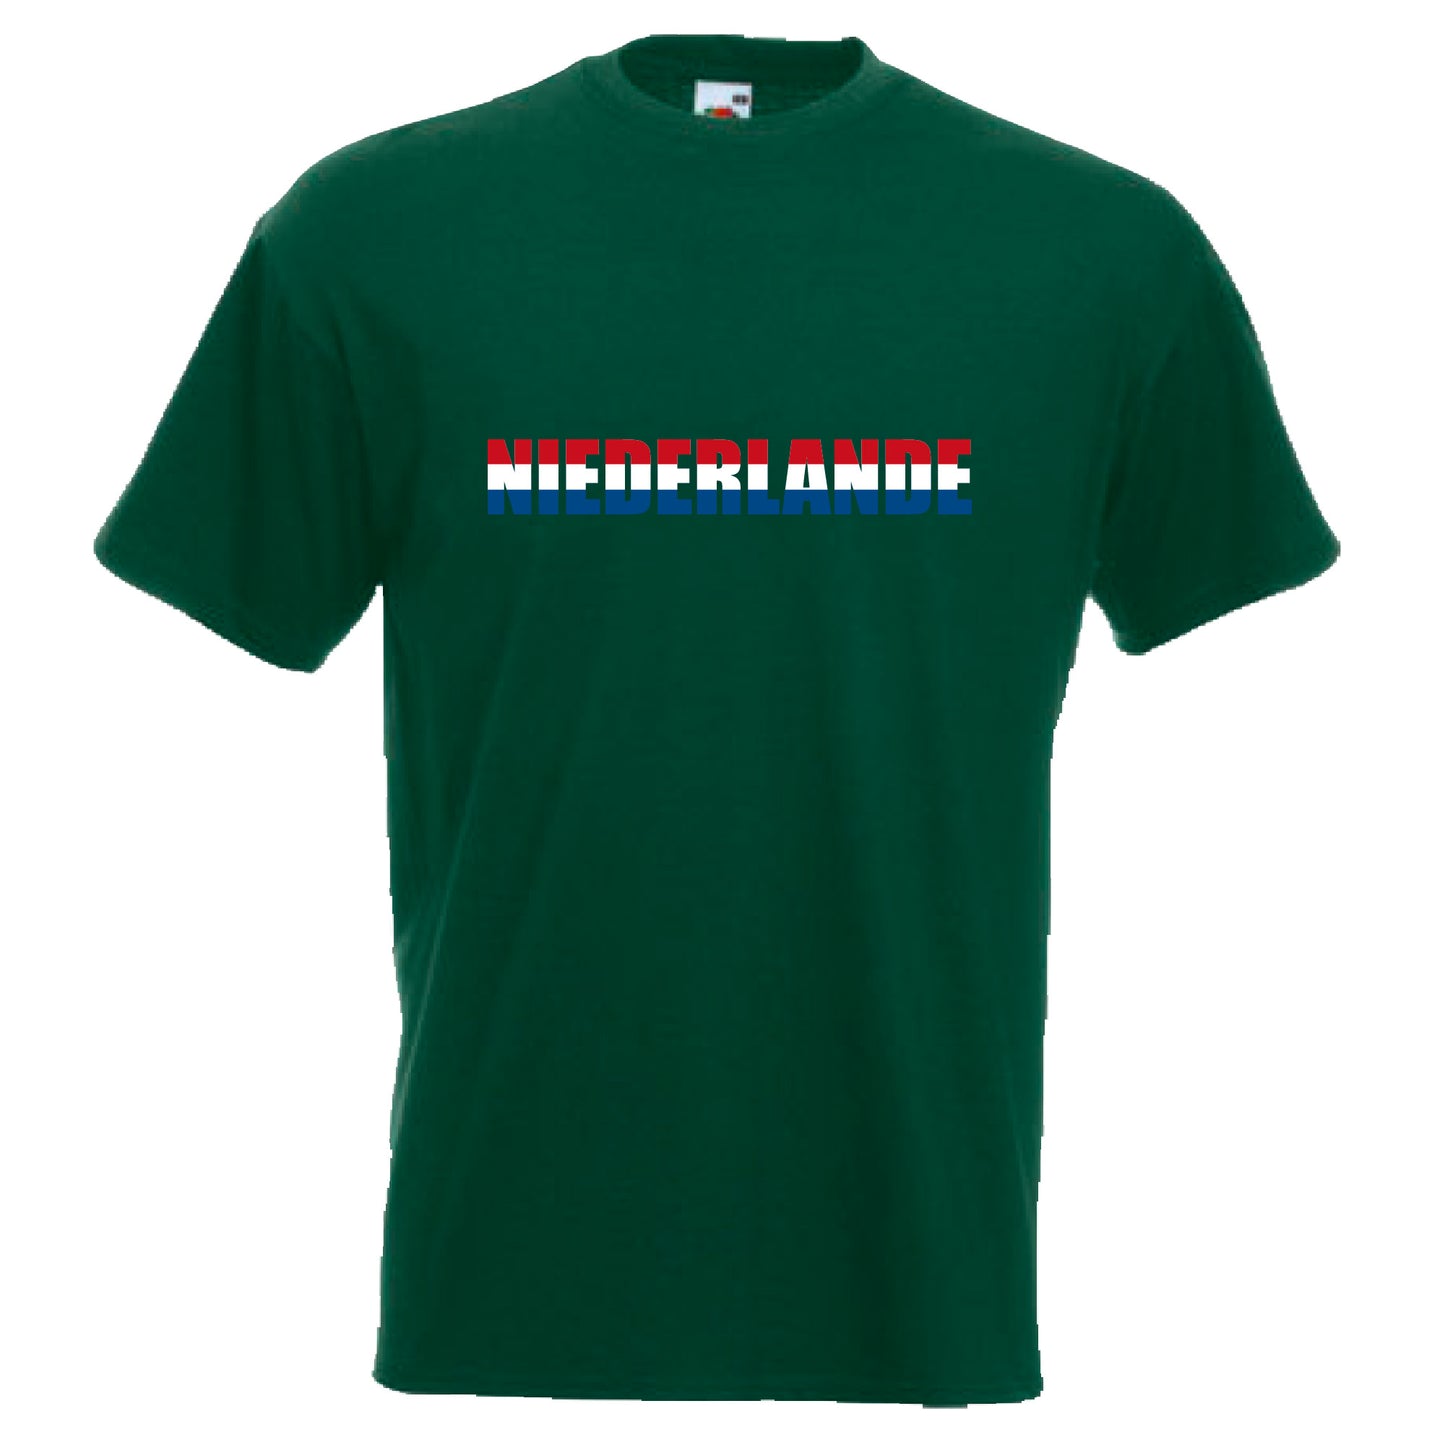 INDIGOS UG - T-Shirt Herren - Niederlande - Schriftzug - Fussball